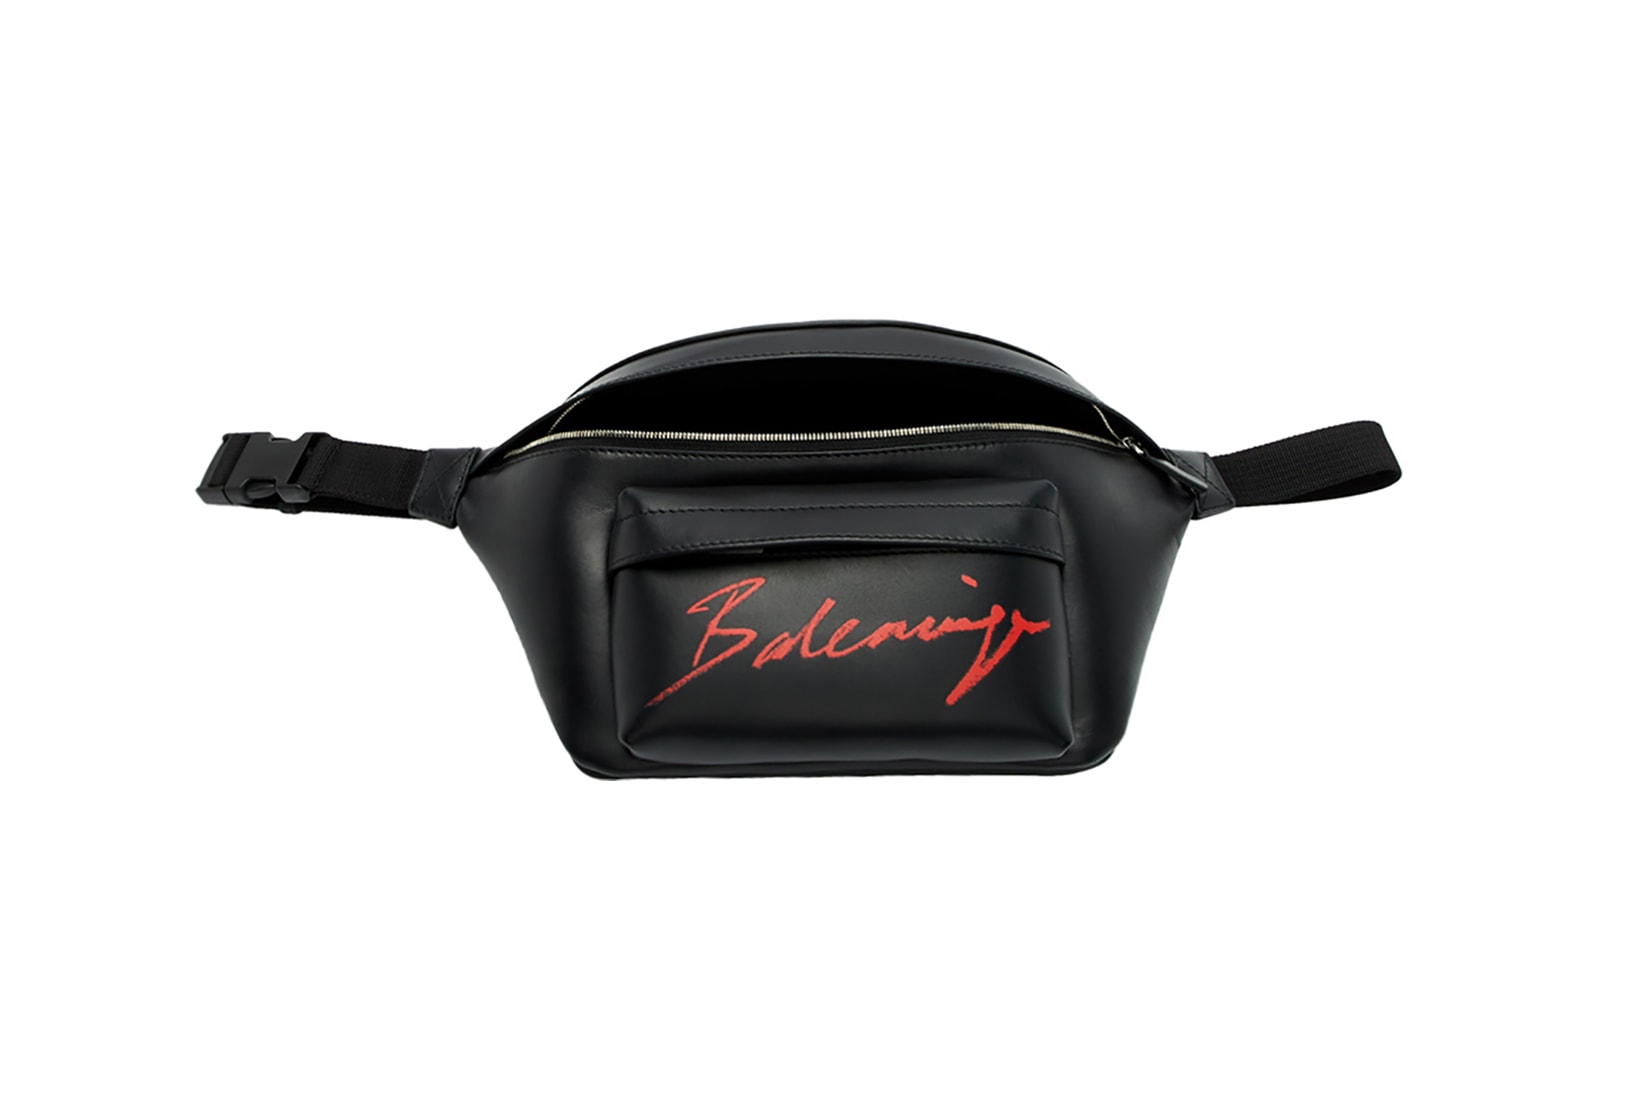 balenciaga belt bag fanny pack black designer luxury